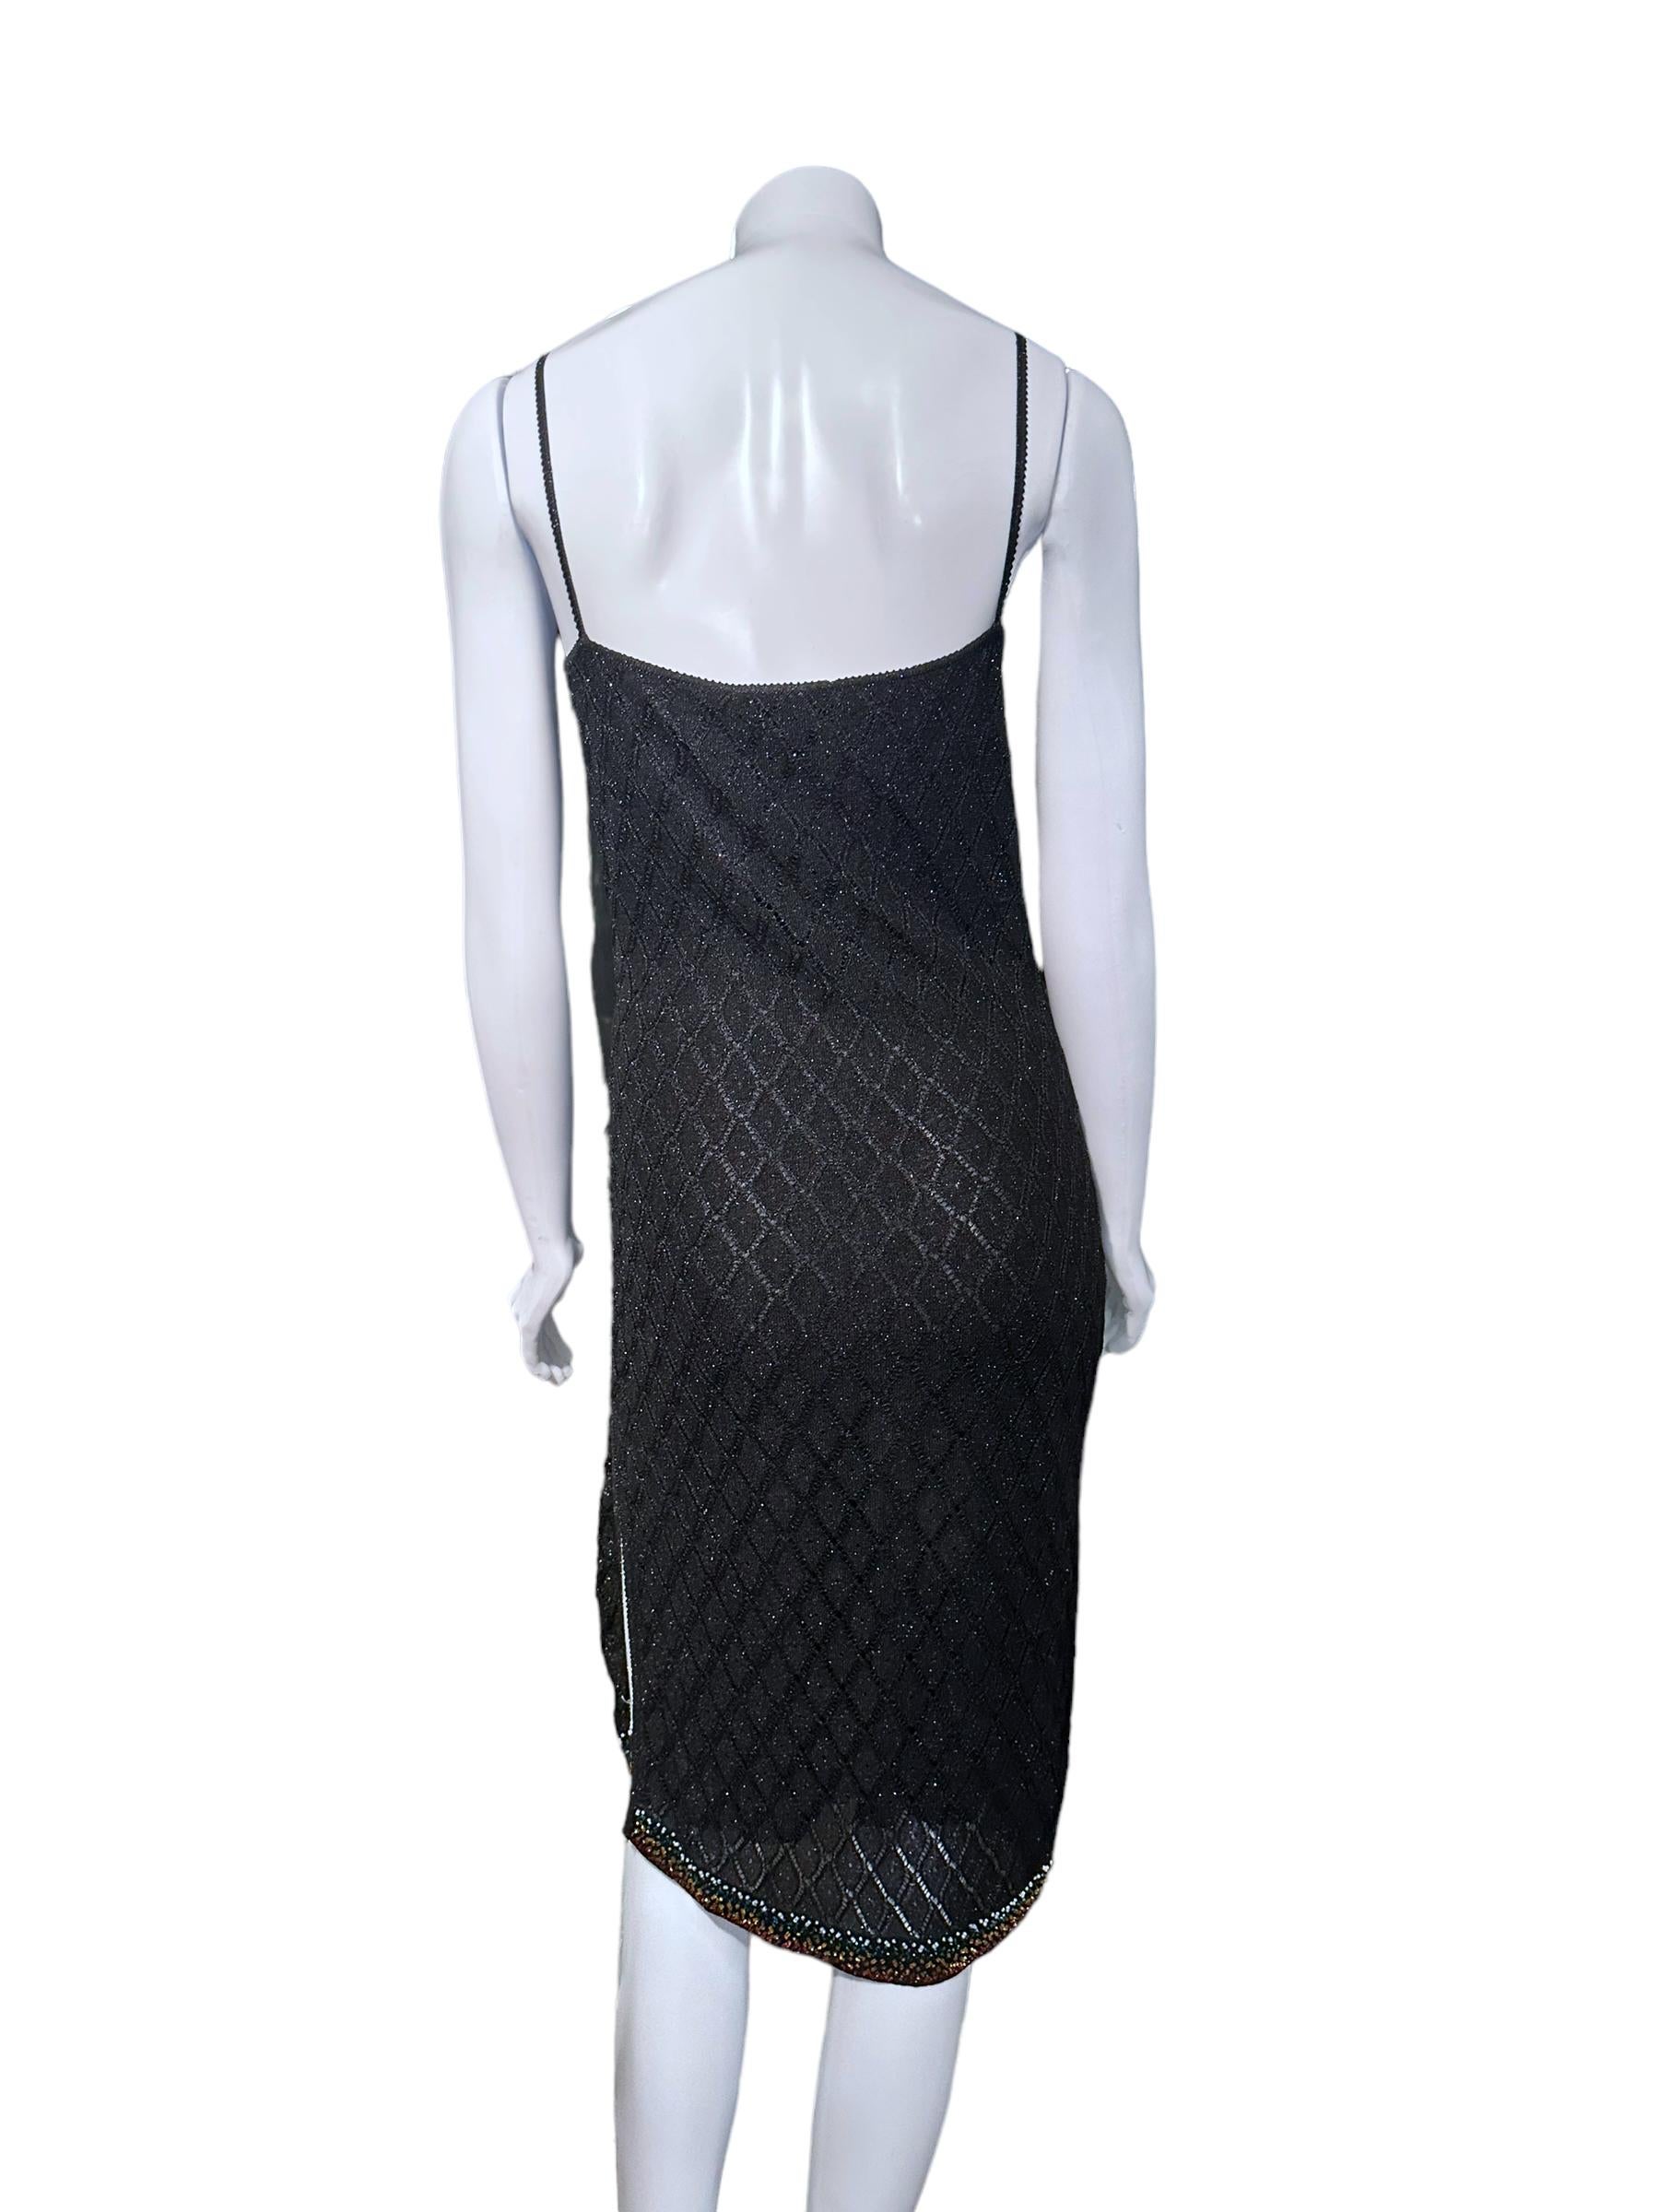 Women's Christian Dior By John Galliano Fw 2001 Beaded Neckline Knitted Short Slip Dress For Sale